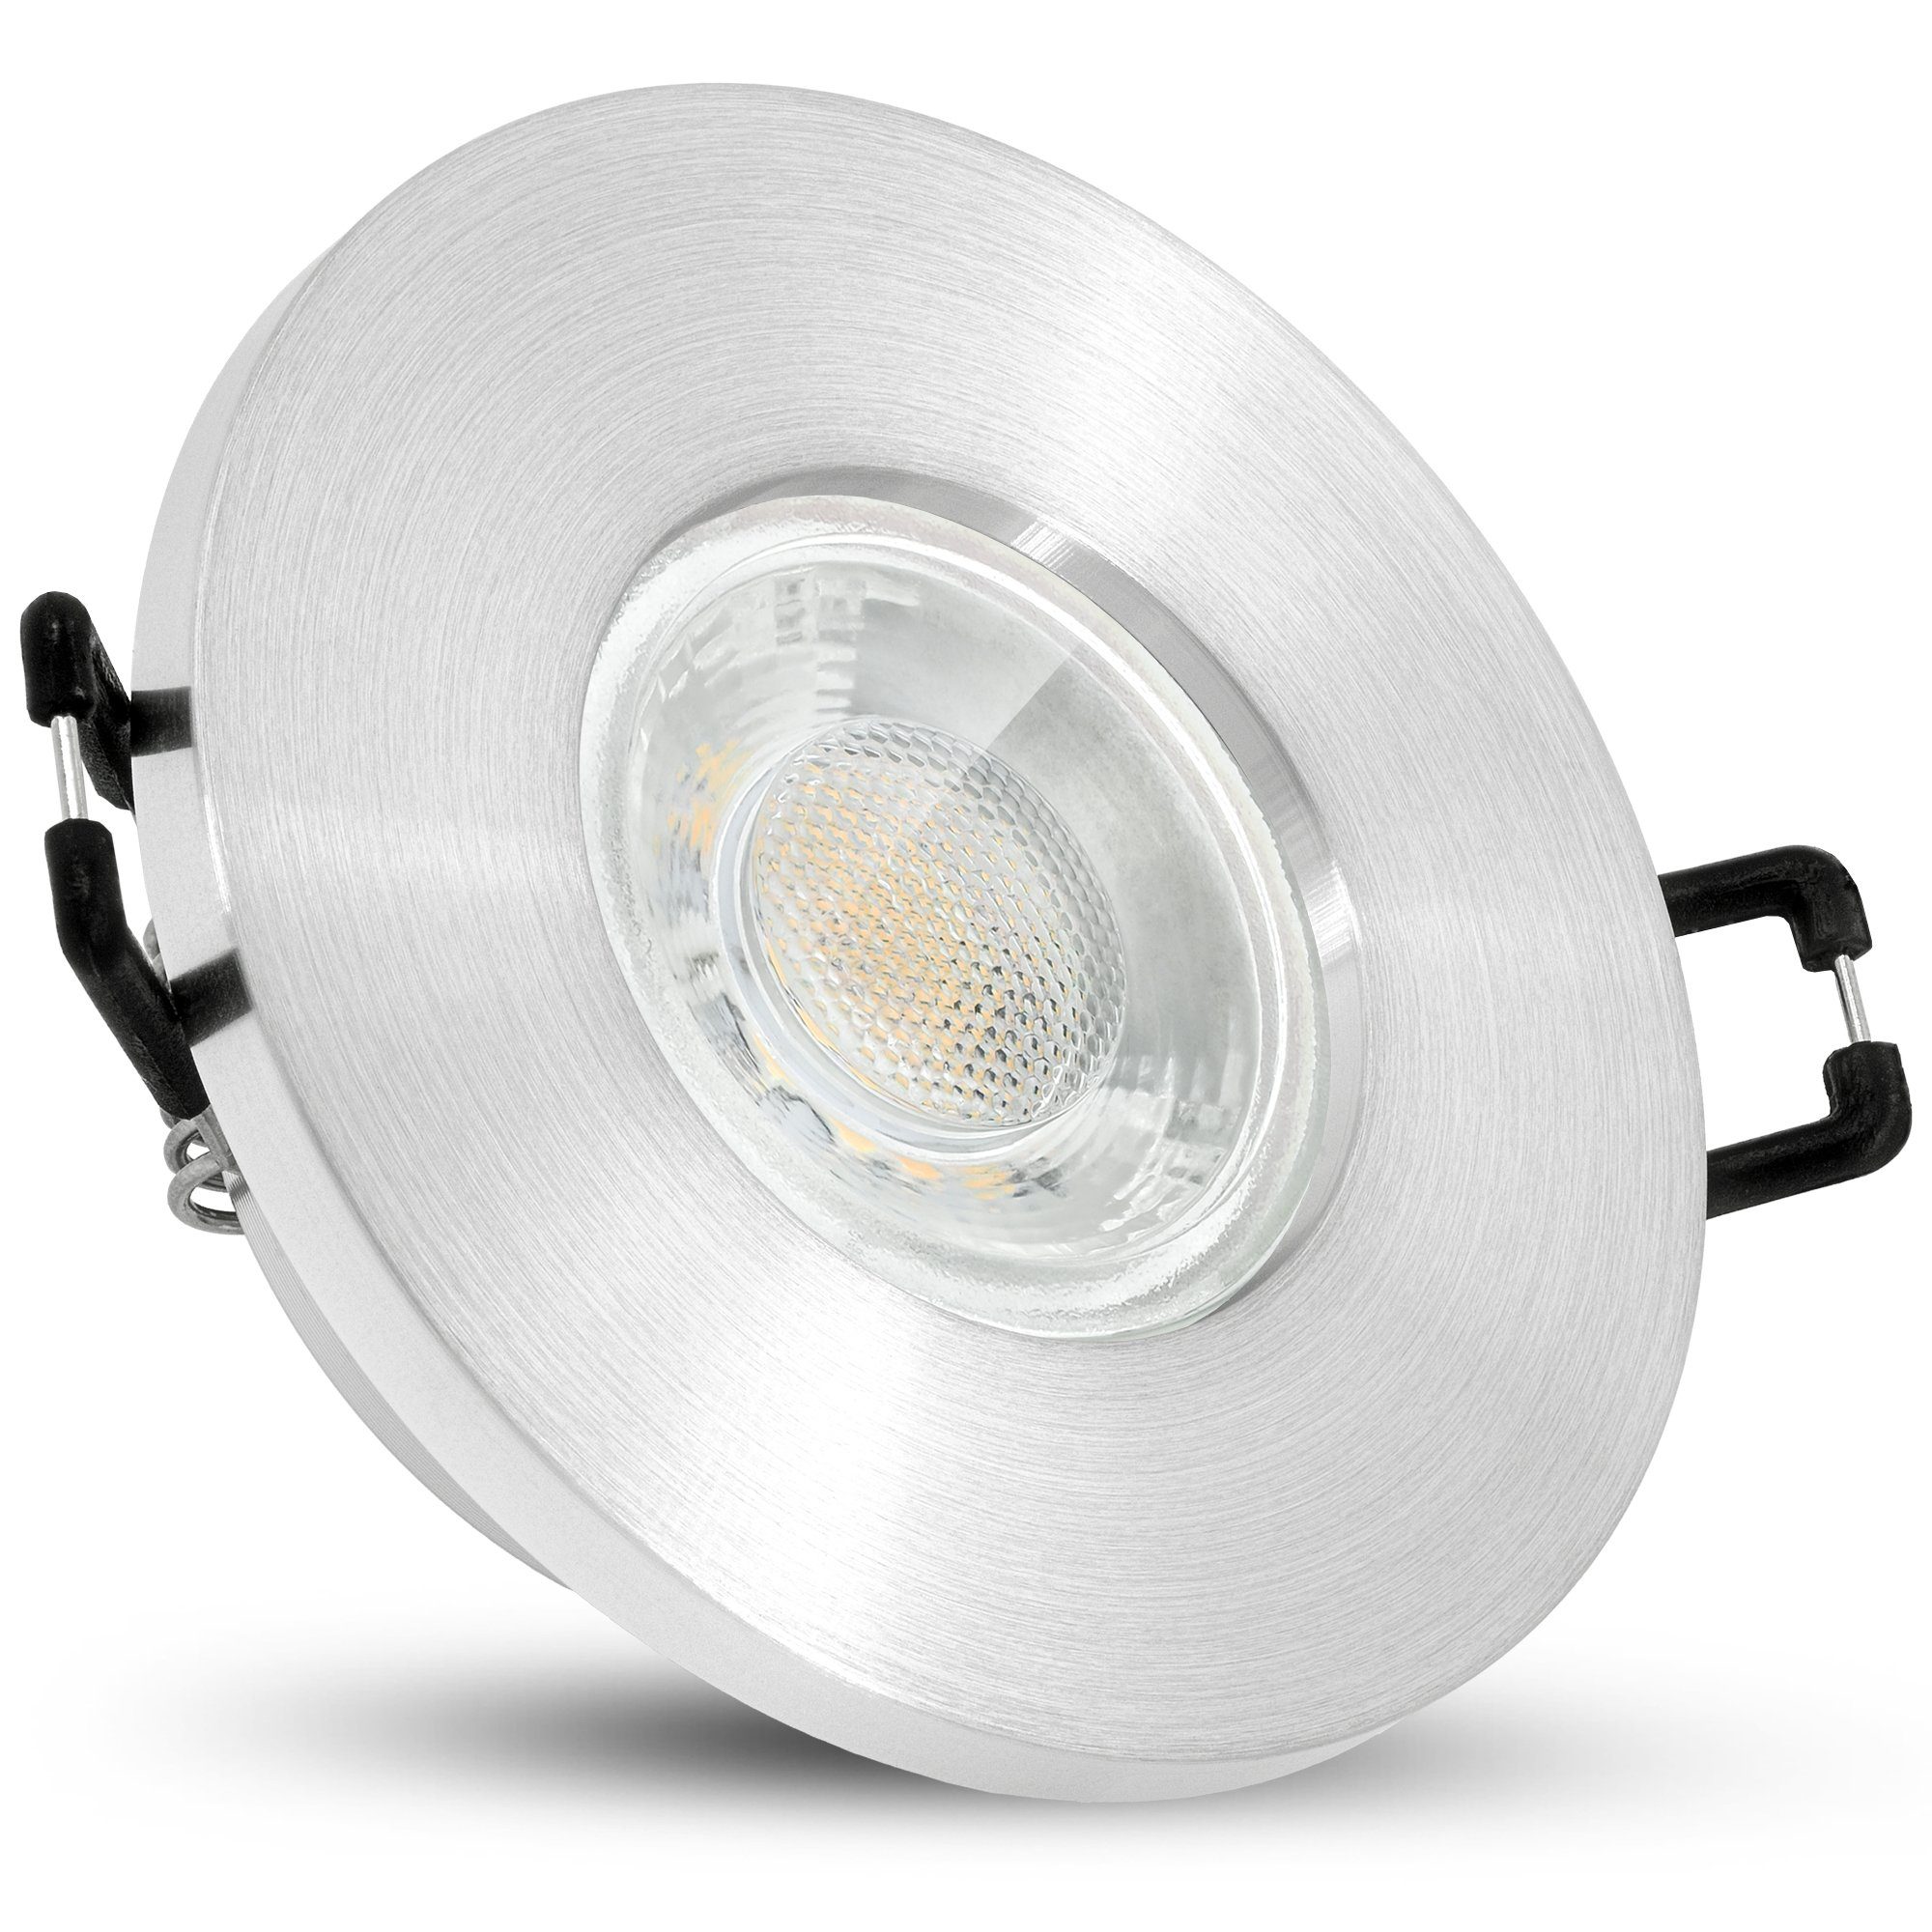 linovum LED 6W Bad inklusive warmweiss inklusive, Leuchtmittel Einbaustrahler LED IP65 230V, Einbaustrahler Leuchtmittel GU10